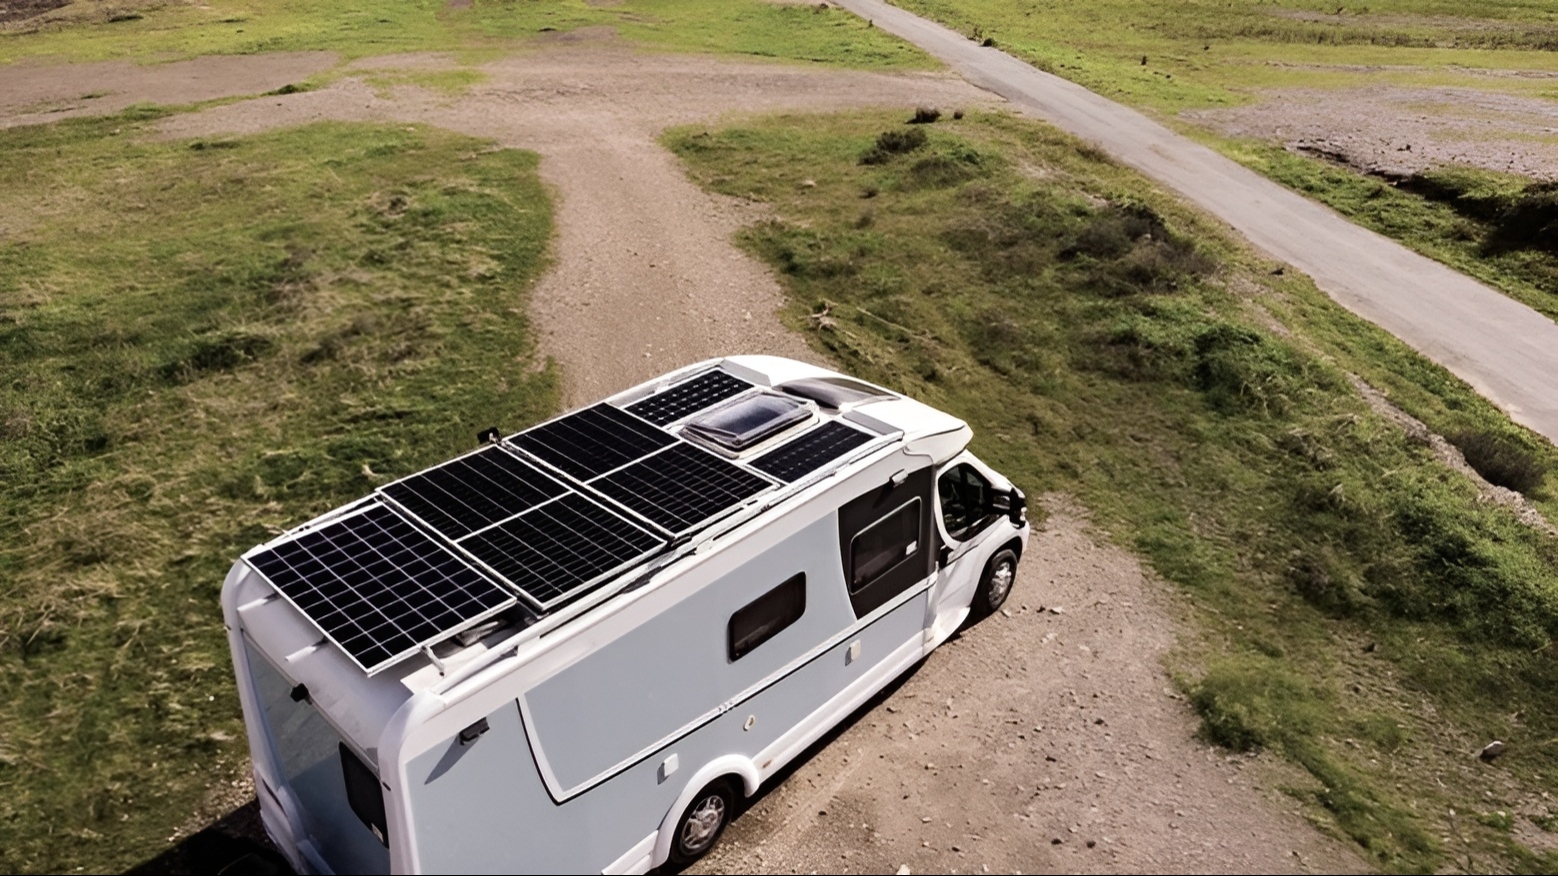 Cheap solar panel alternative for caravan